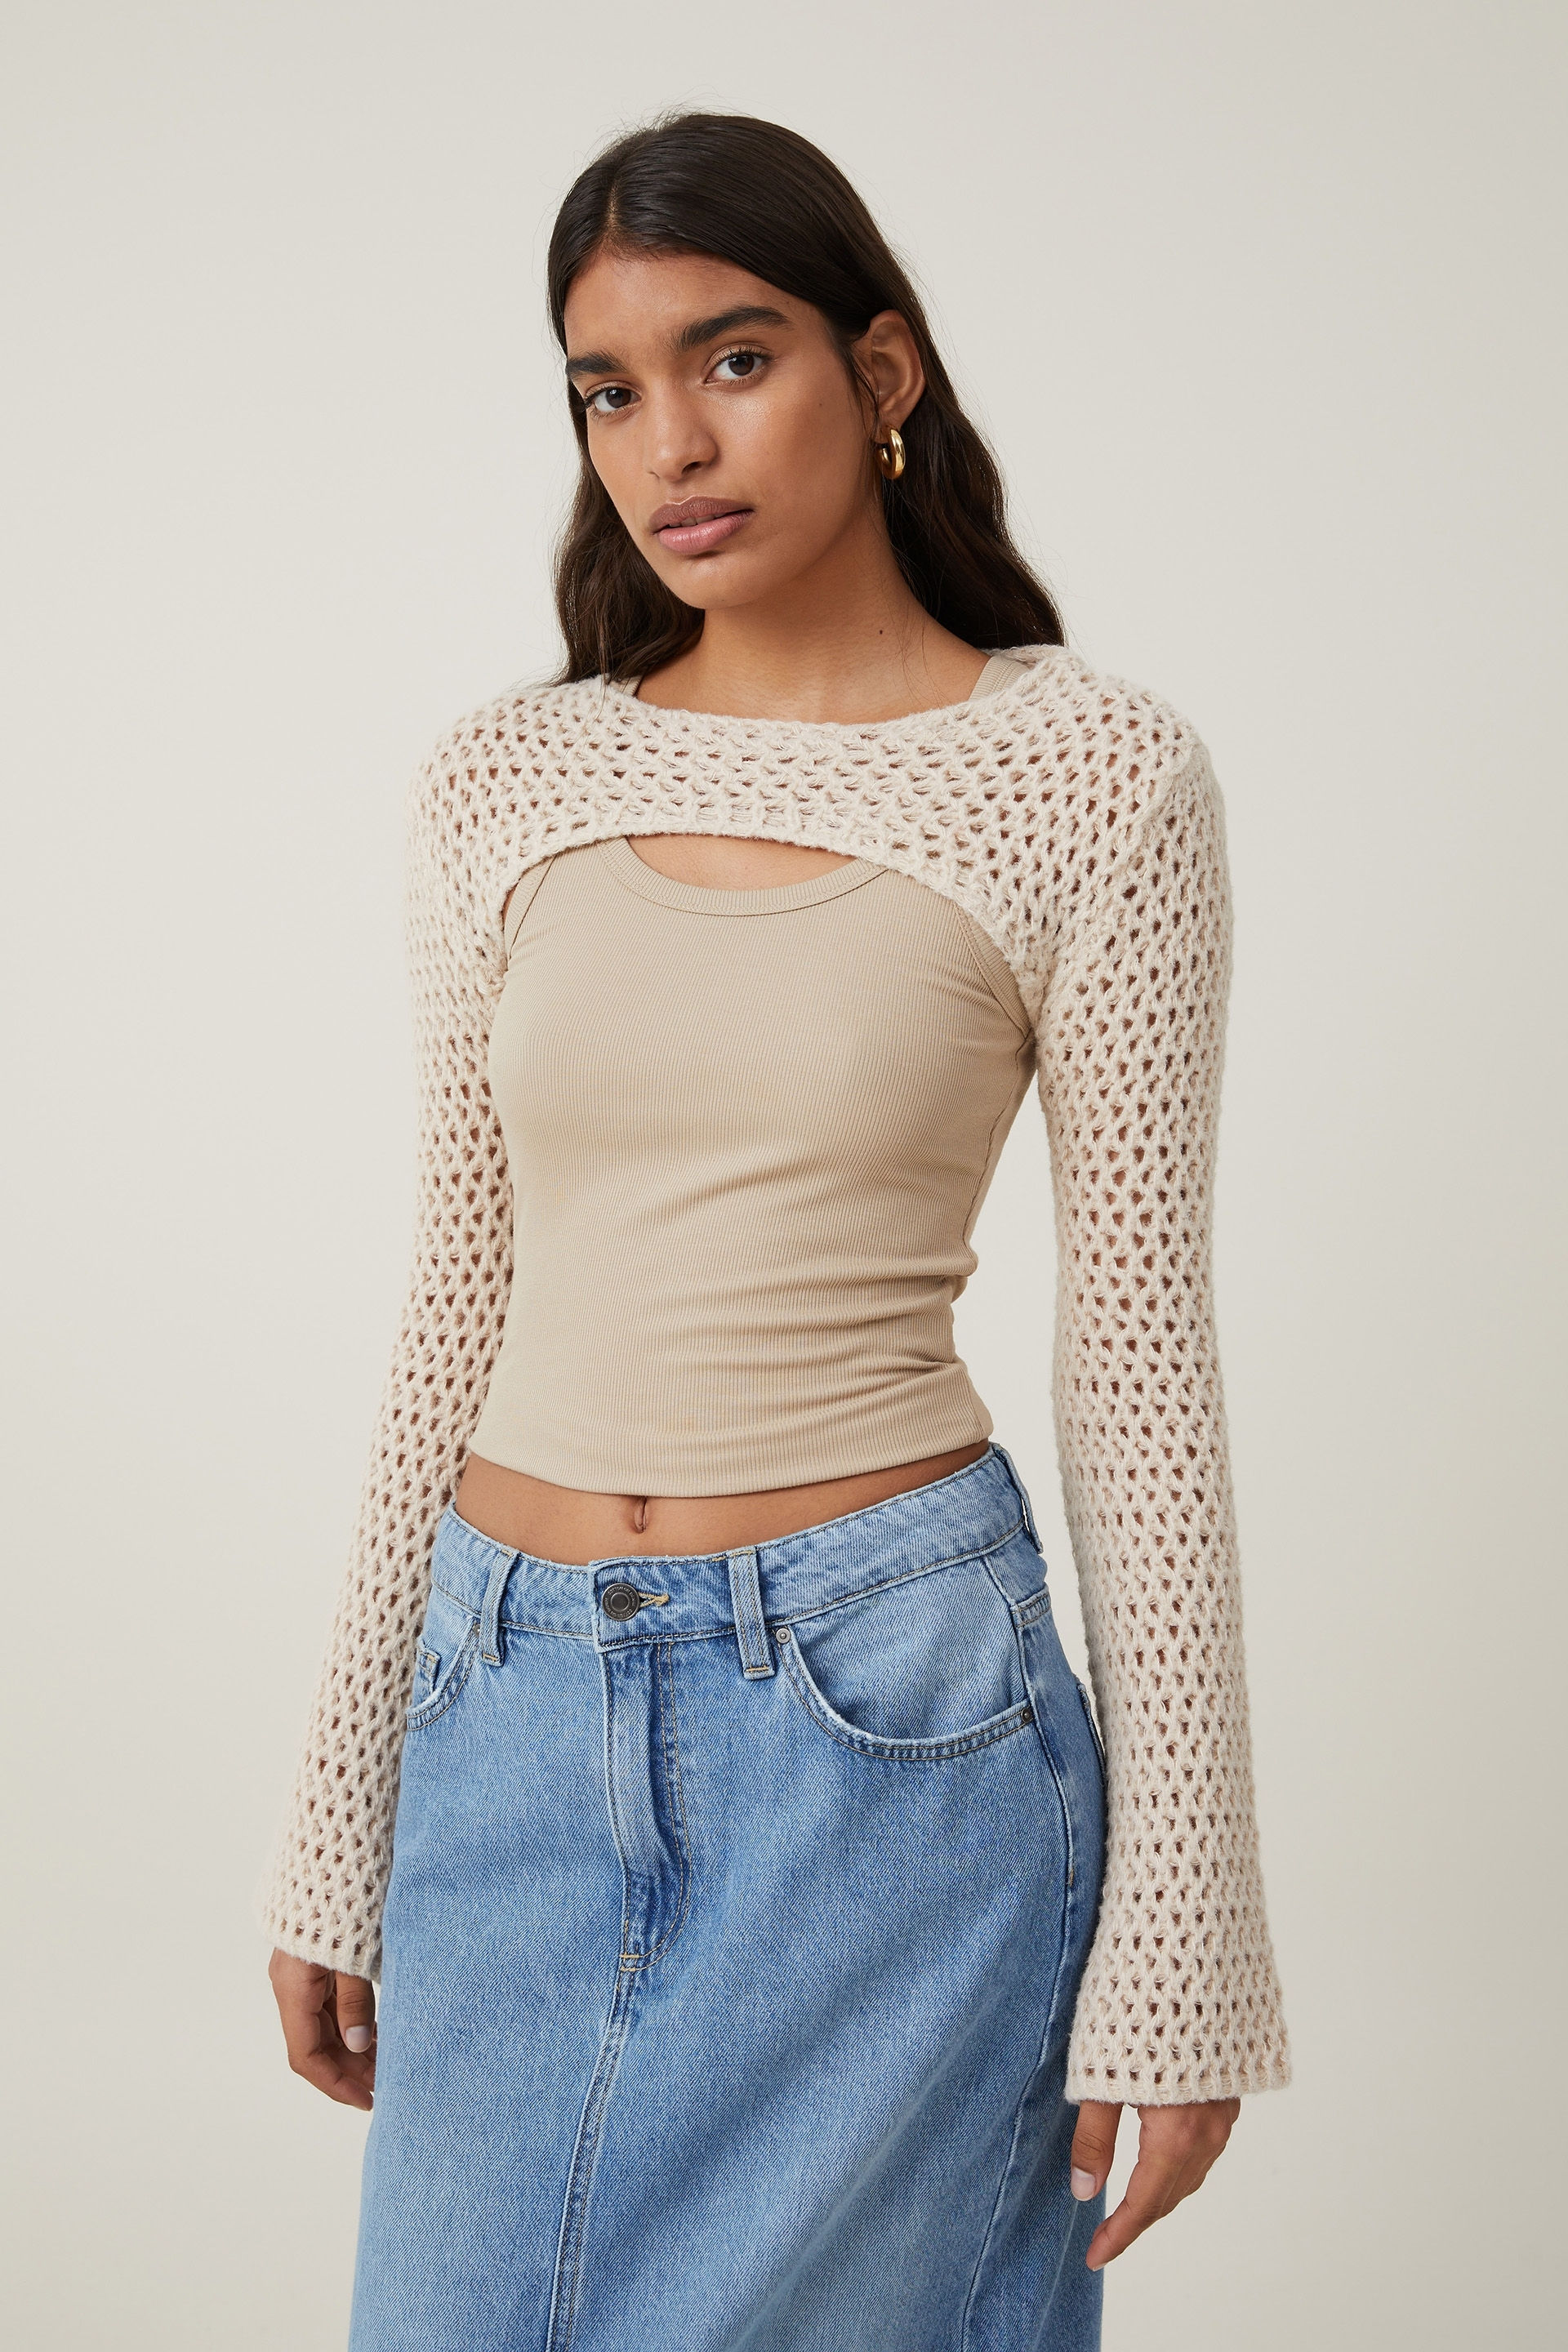 Cotton On Women - Holey Pullover Shrug - Wheat